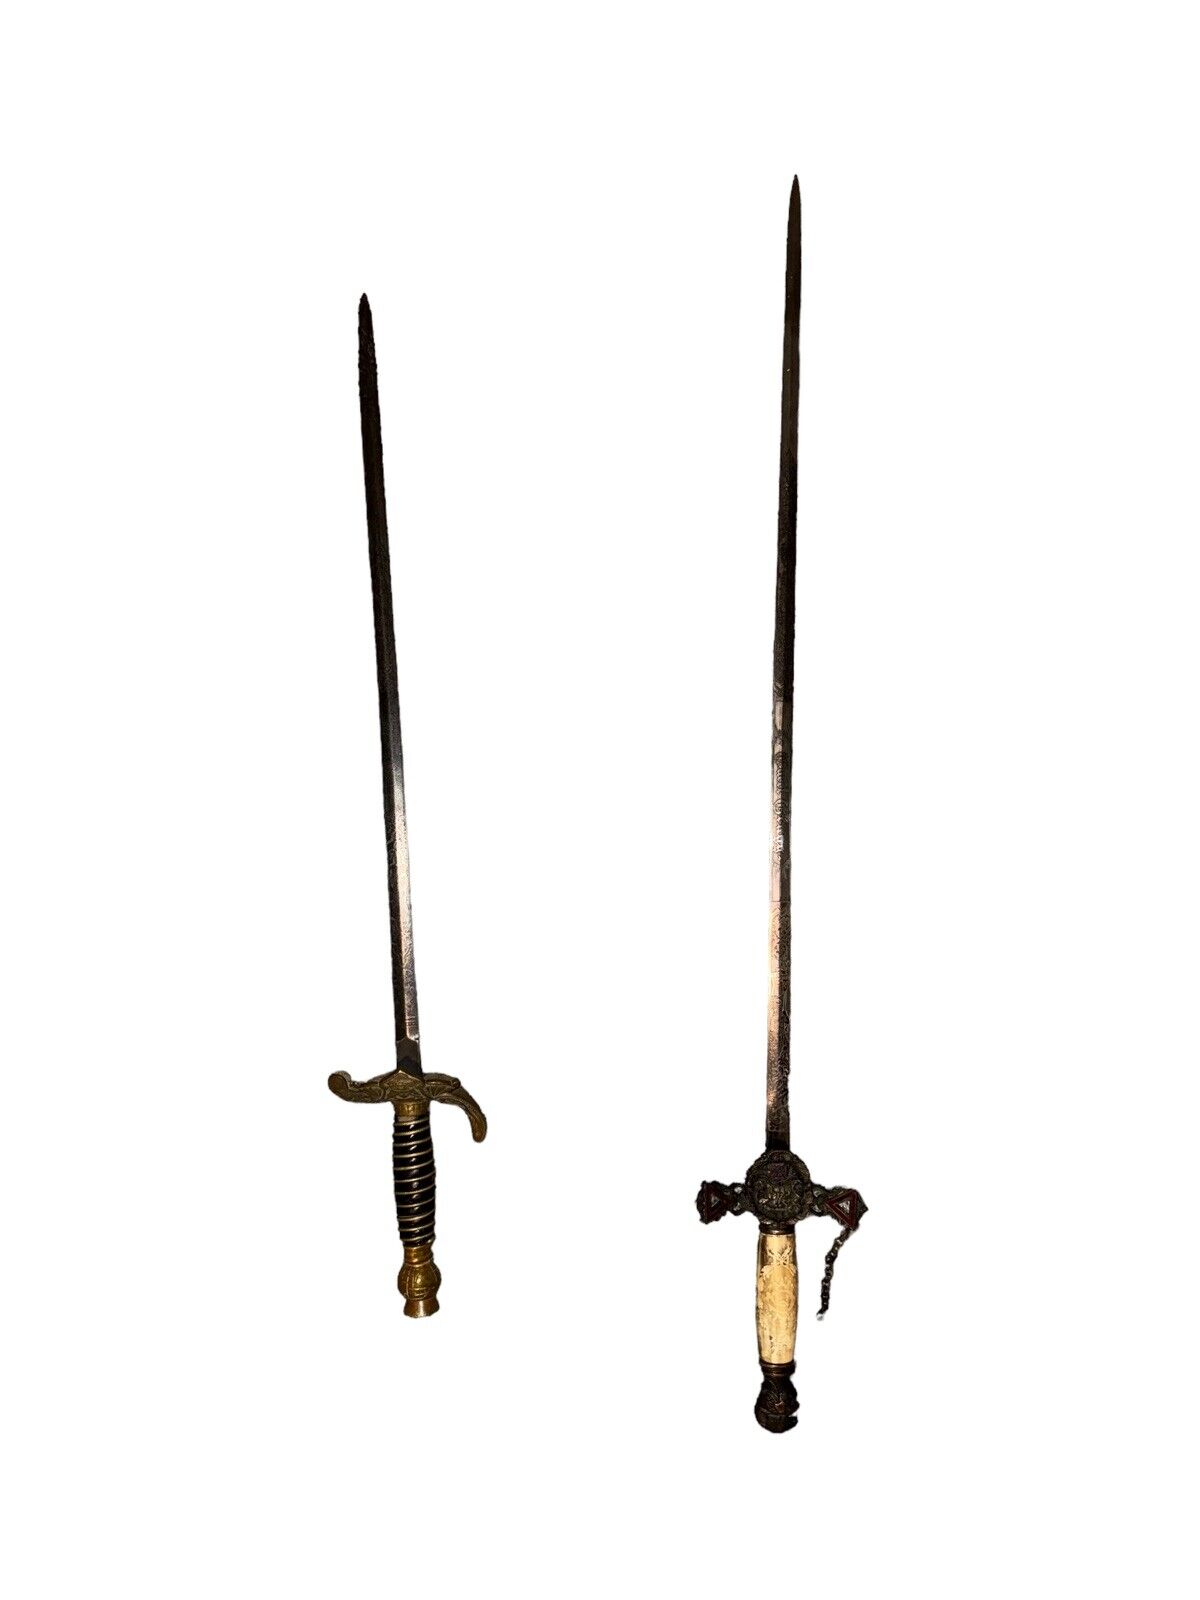 2 Antique Knights Templar Masonic Sword W/ Engravings